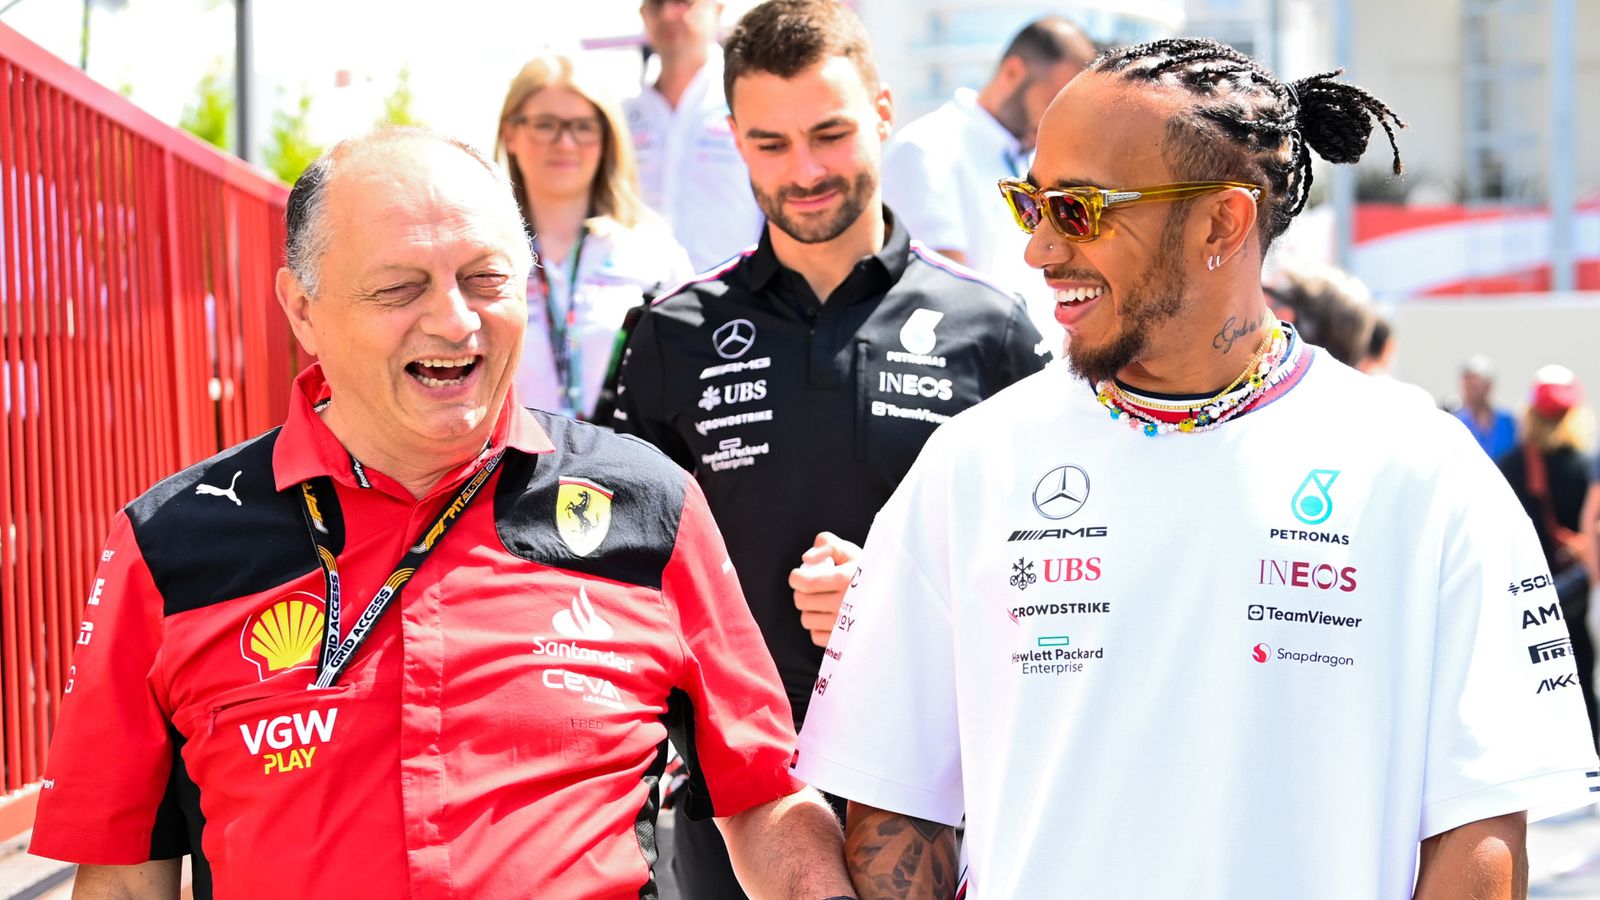 Lewis Hamilton 'set to join Ferrari' as secret Mercedes contract